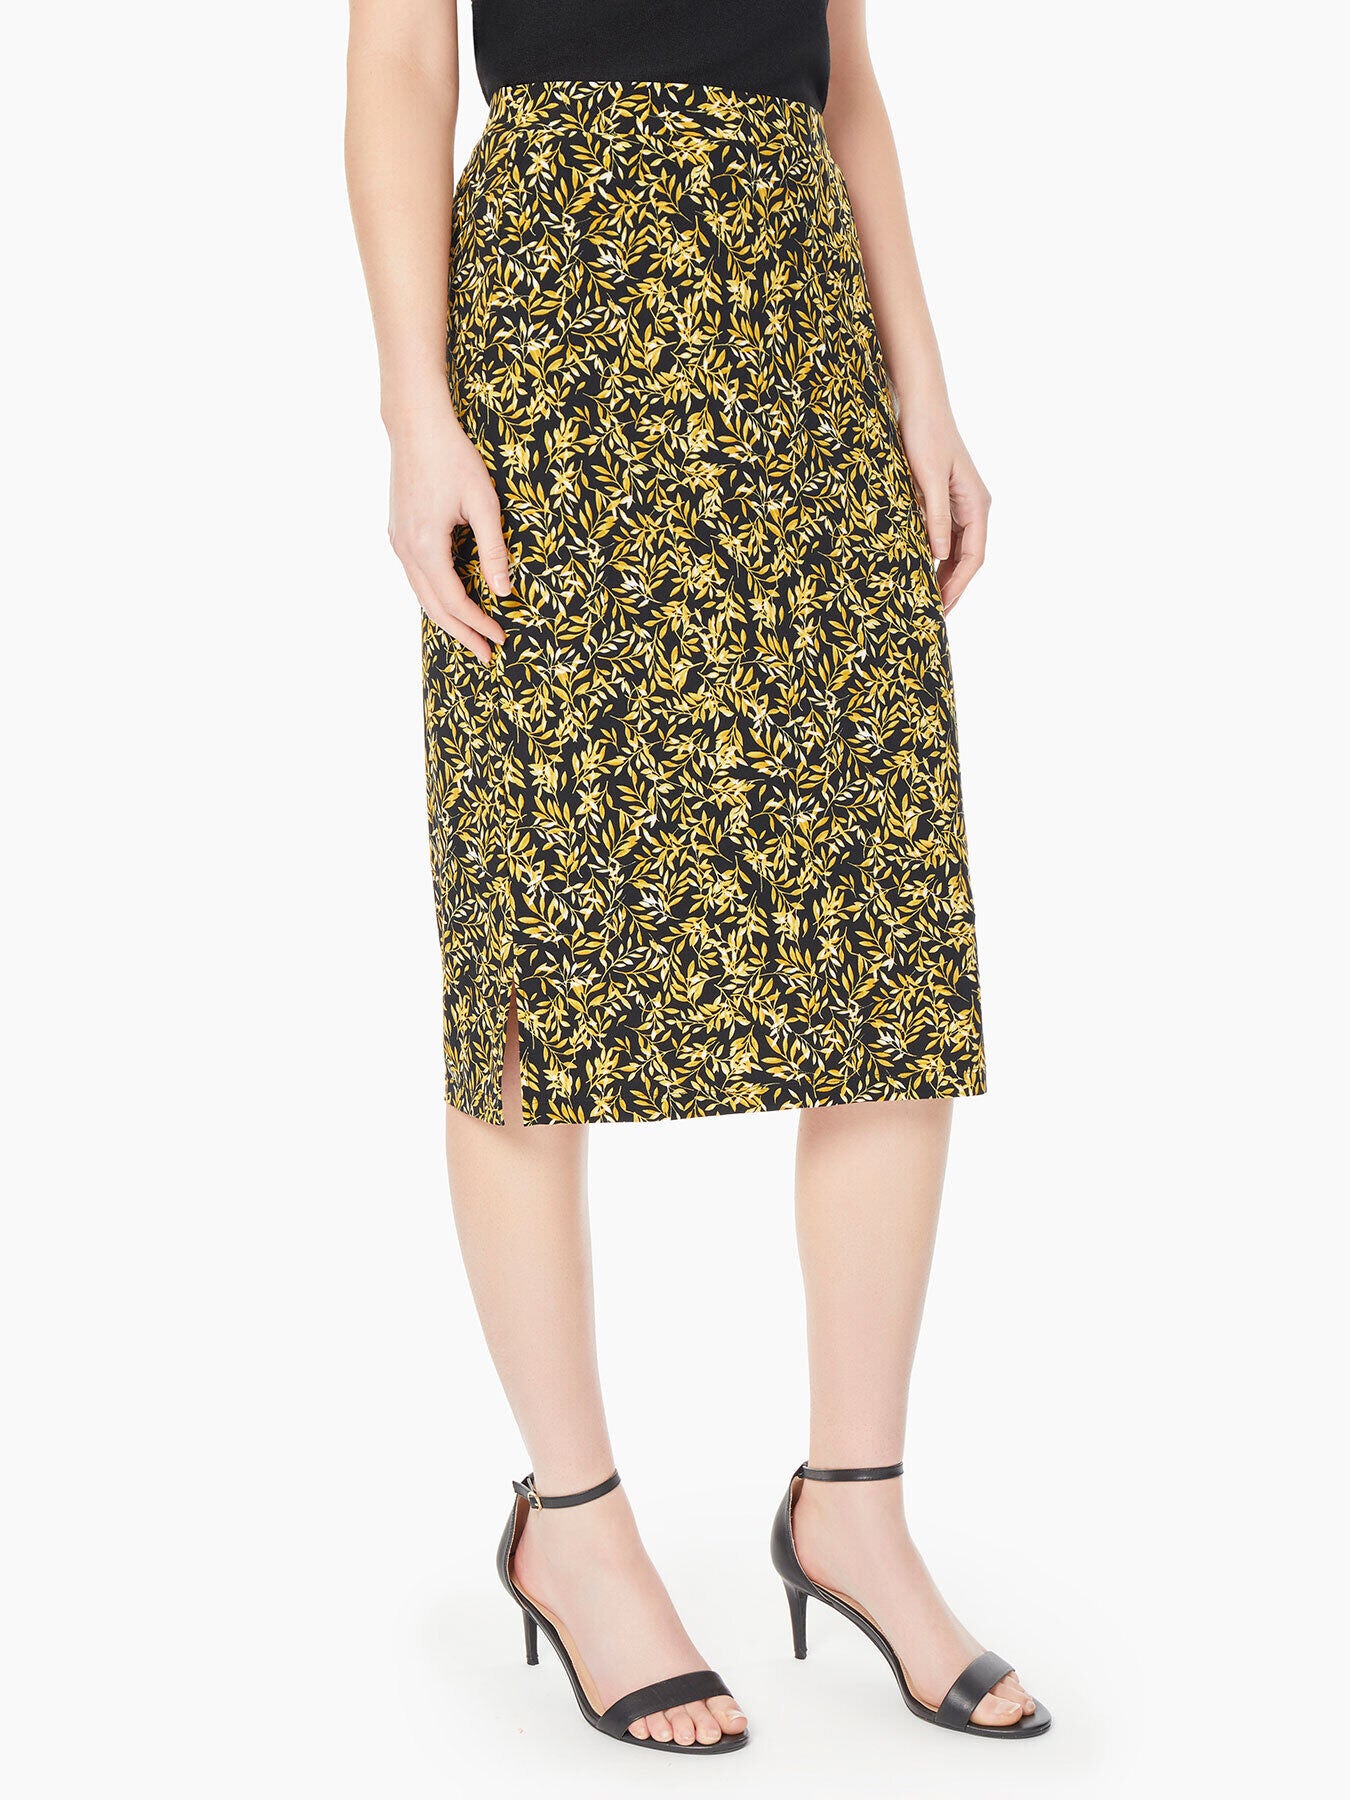 Black and Yellow Skirt - Plus Size A-Line Skirt | Kasper